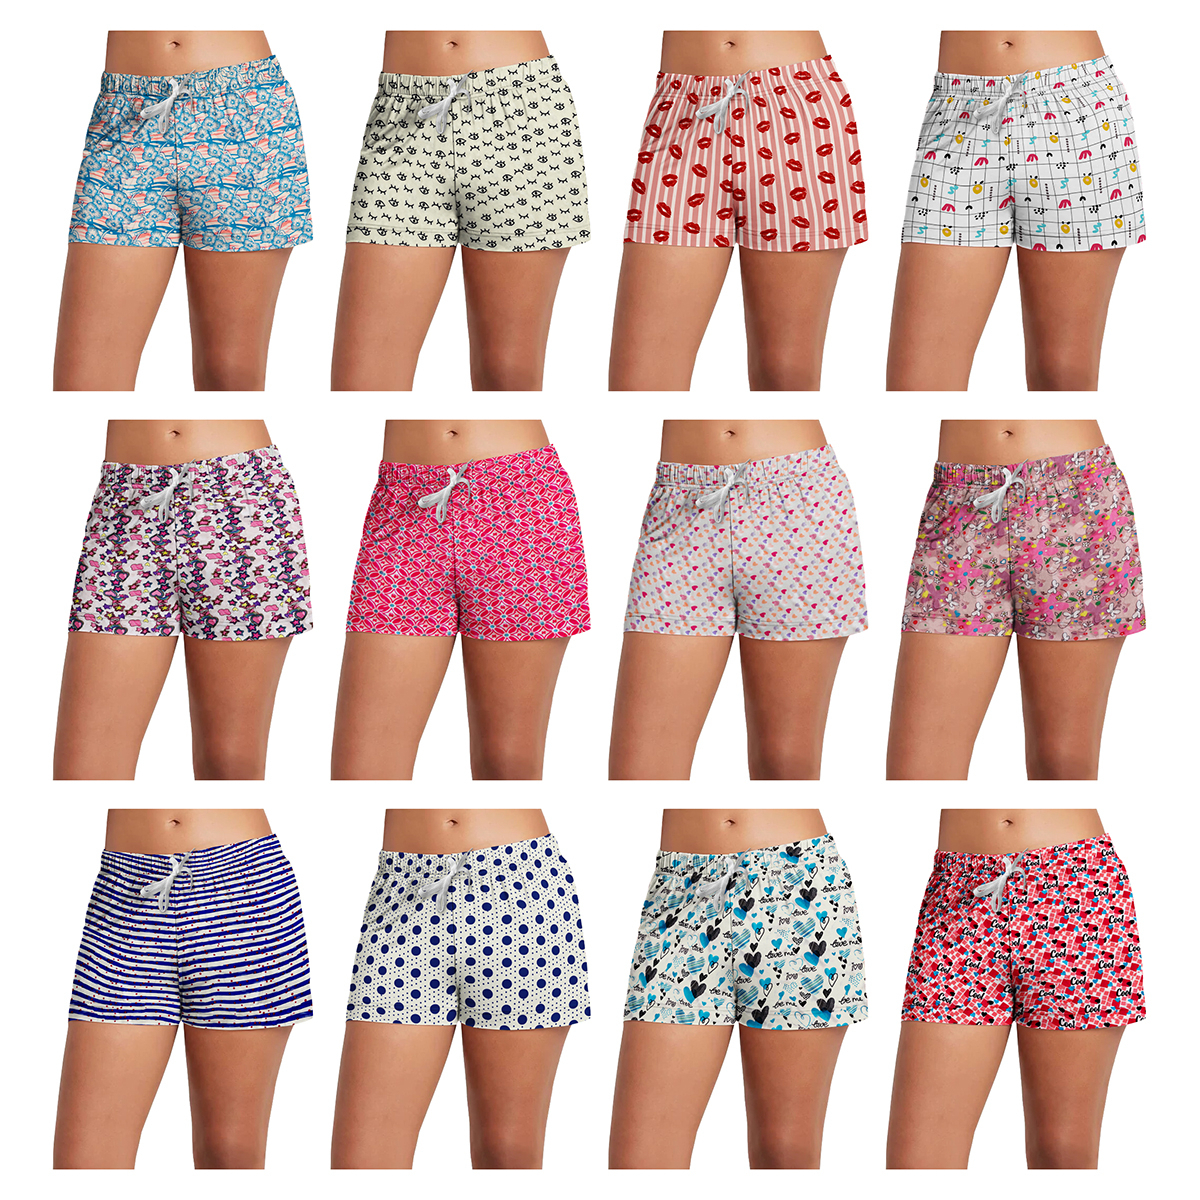 Women's Comfy Lounge Bottom Pajama Shorts With Drawstring (4 Pairs) - Large